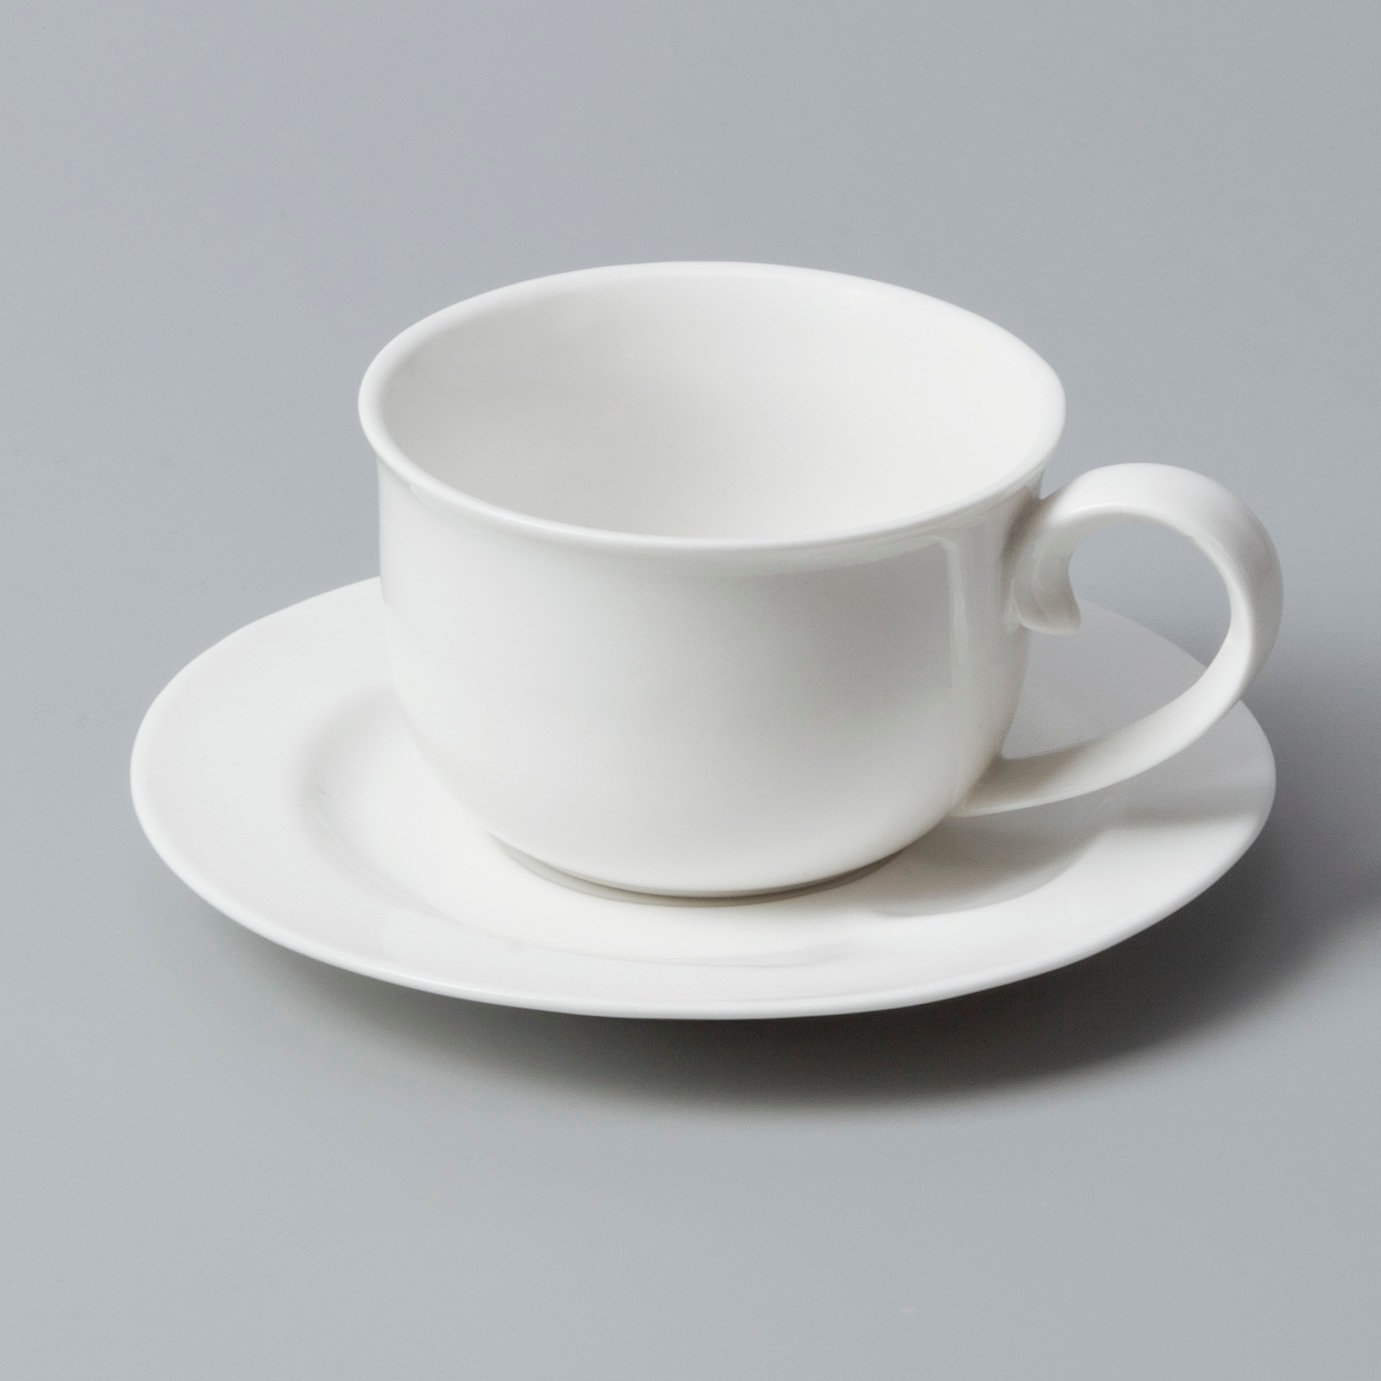 glaze best porcelain dinnerware in the world Italian style manufacturerfor home-8